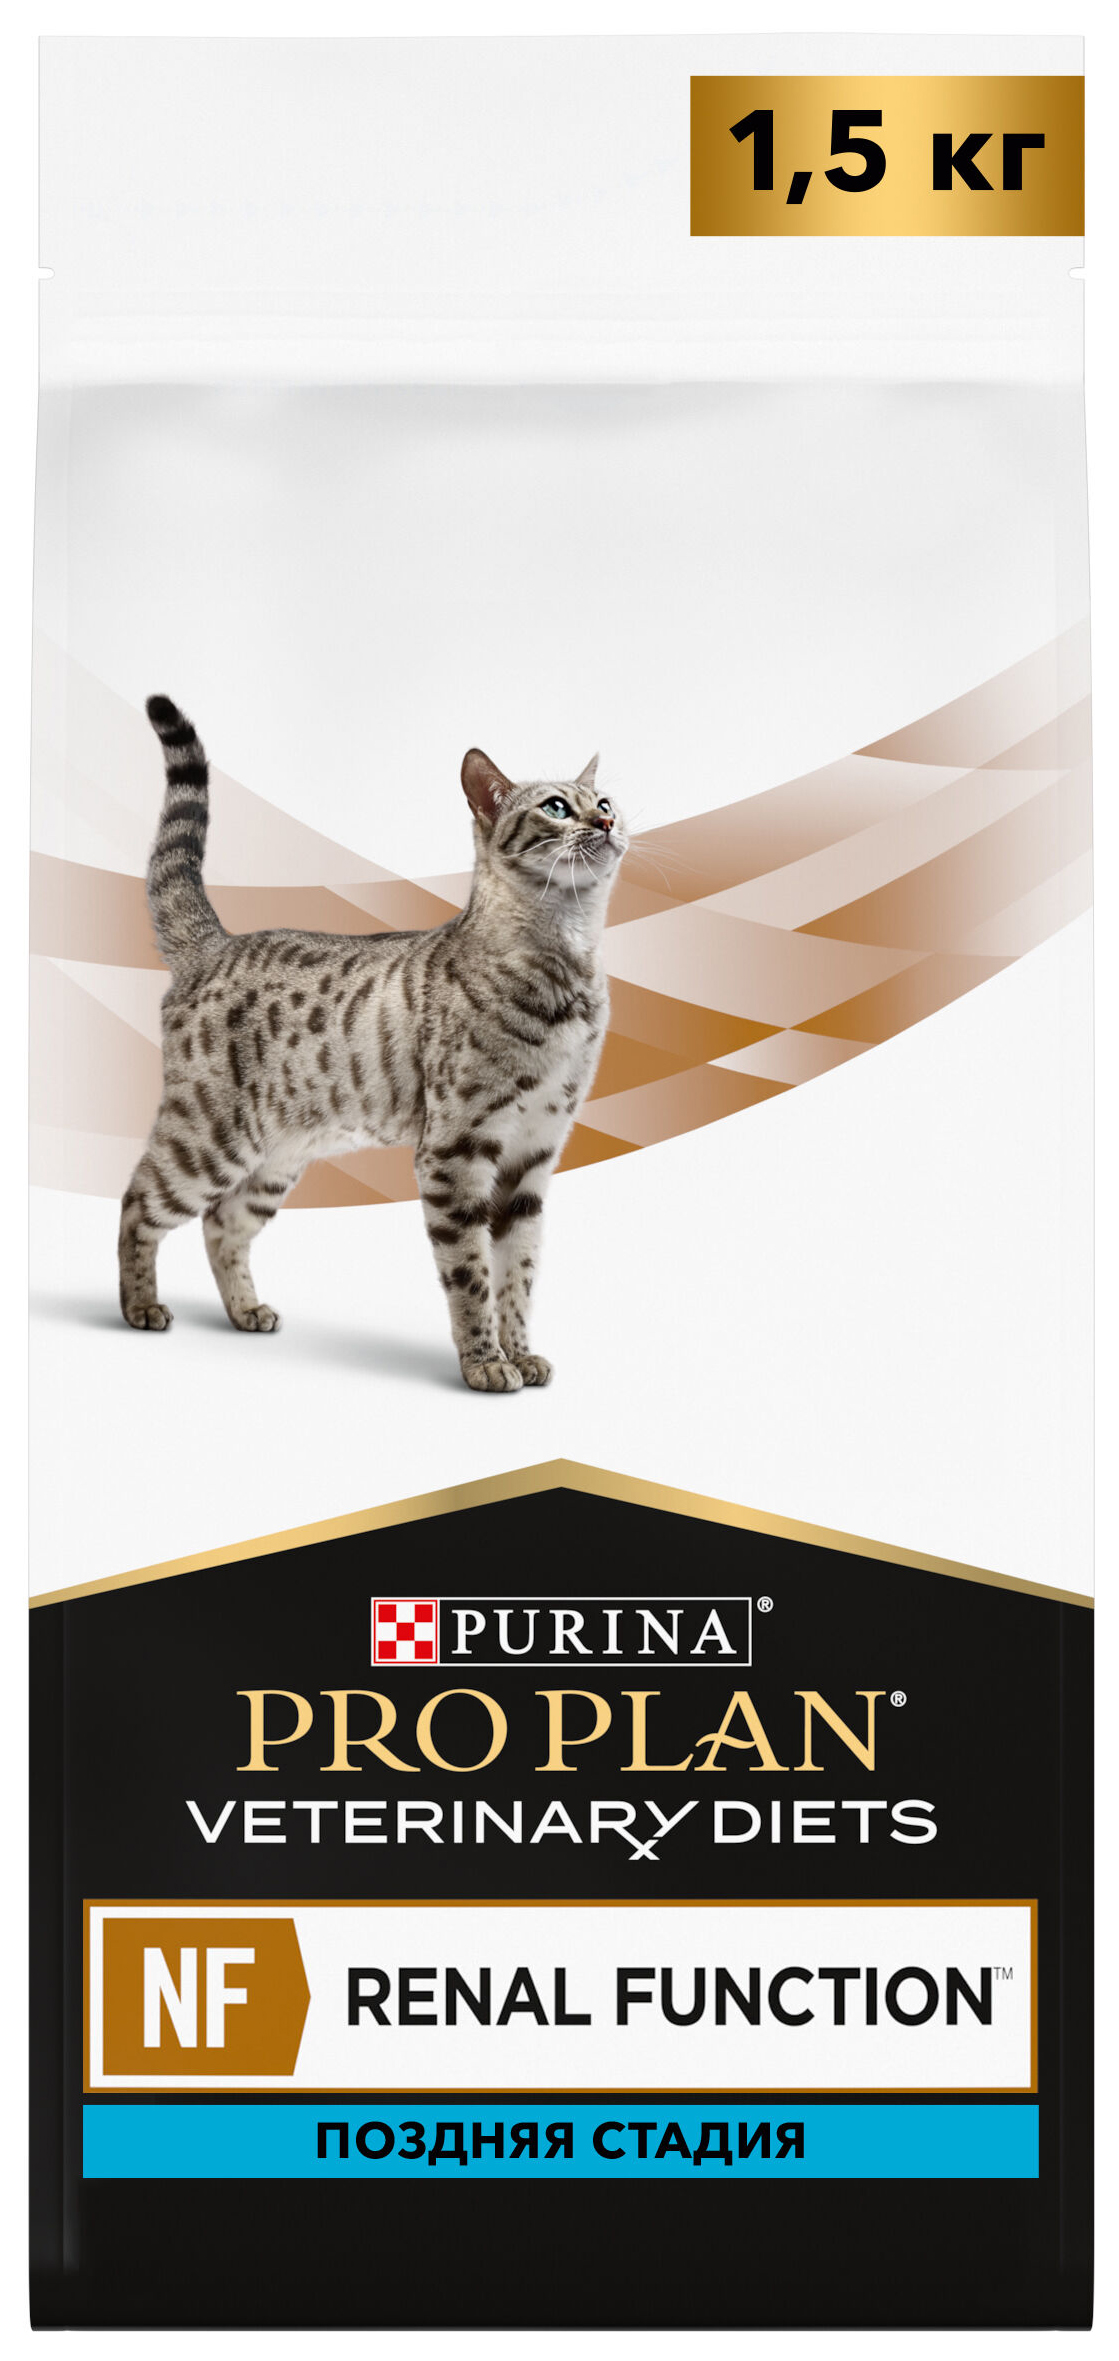 Сухой корм для кошек Pro Plan Veterinary Diets NF Renal Function Advanced care, 1,5 кг